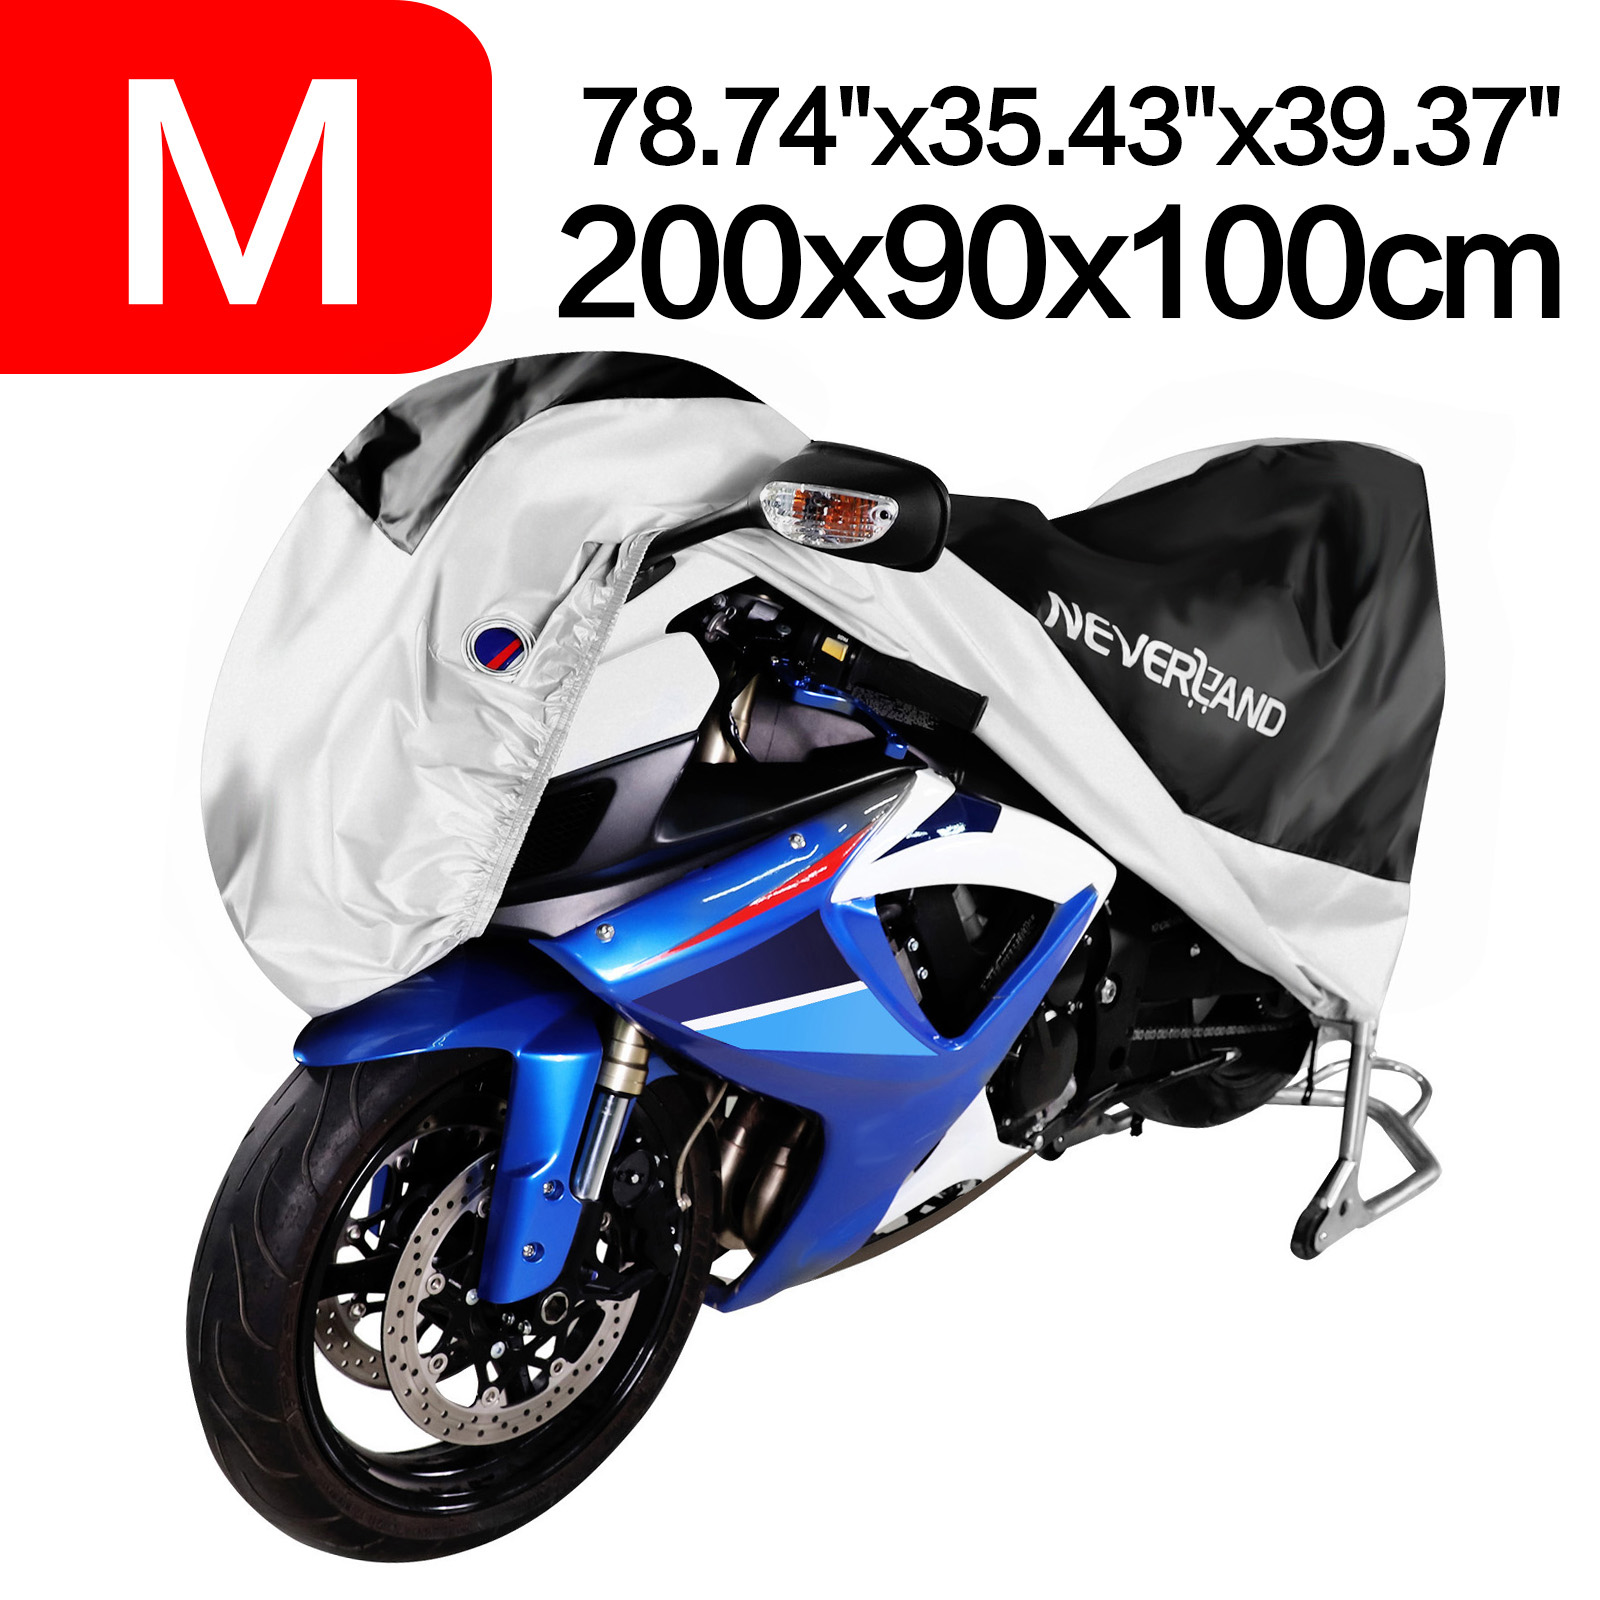 M Dust Bike Motorcycle Scooter Cover Waterproof Outdoor Rain UV Protector Silver